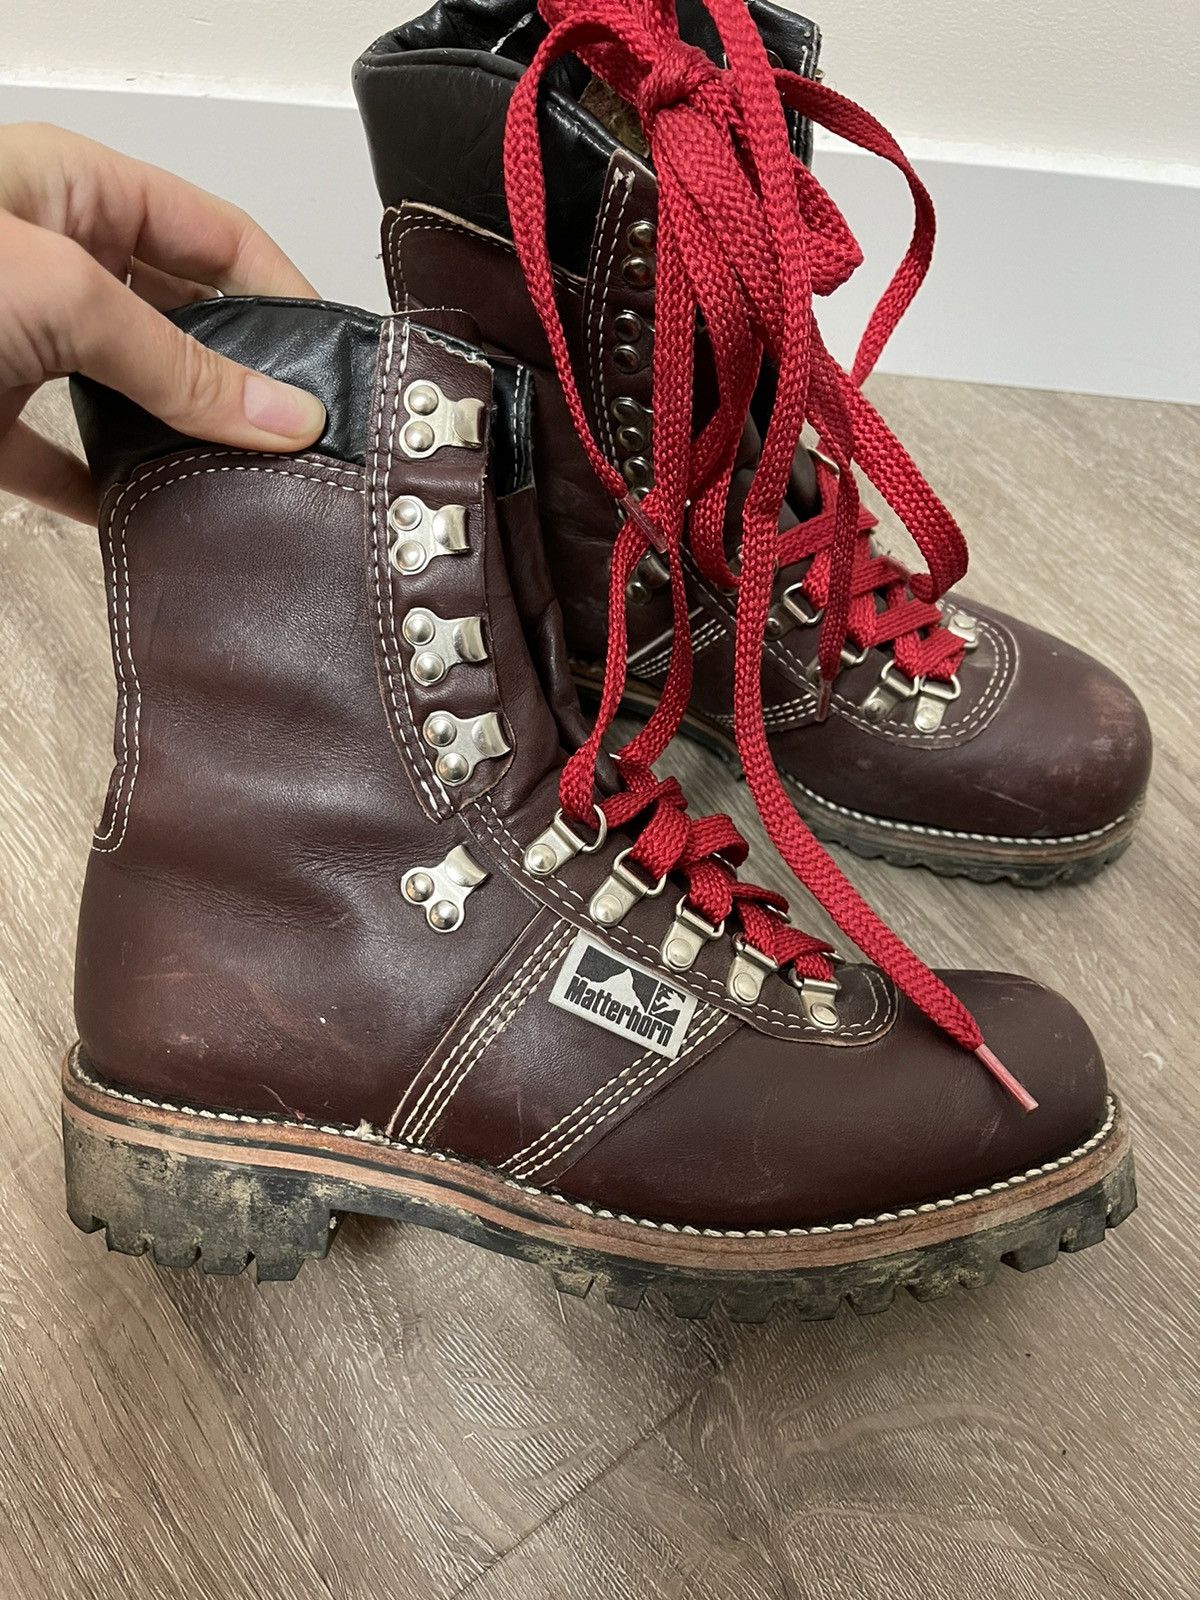 Vintage Matterhorn hiking boots with Vibram soles | Grailed